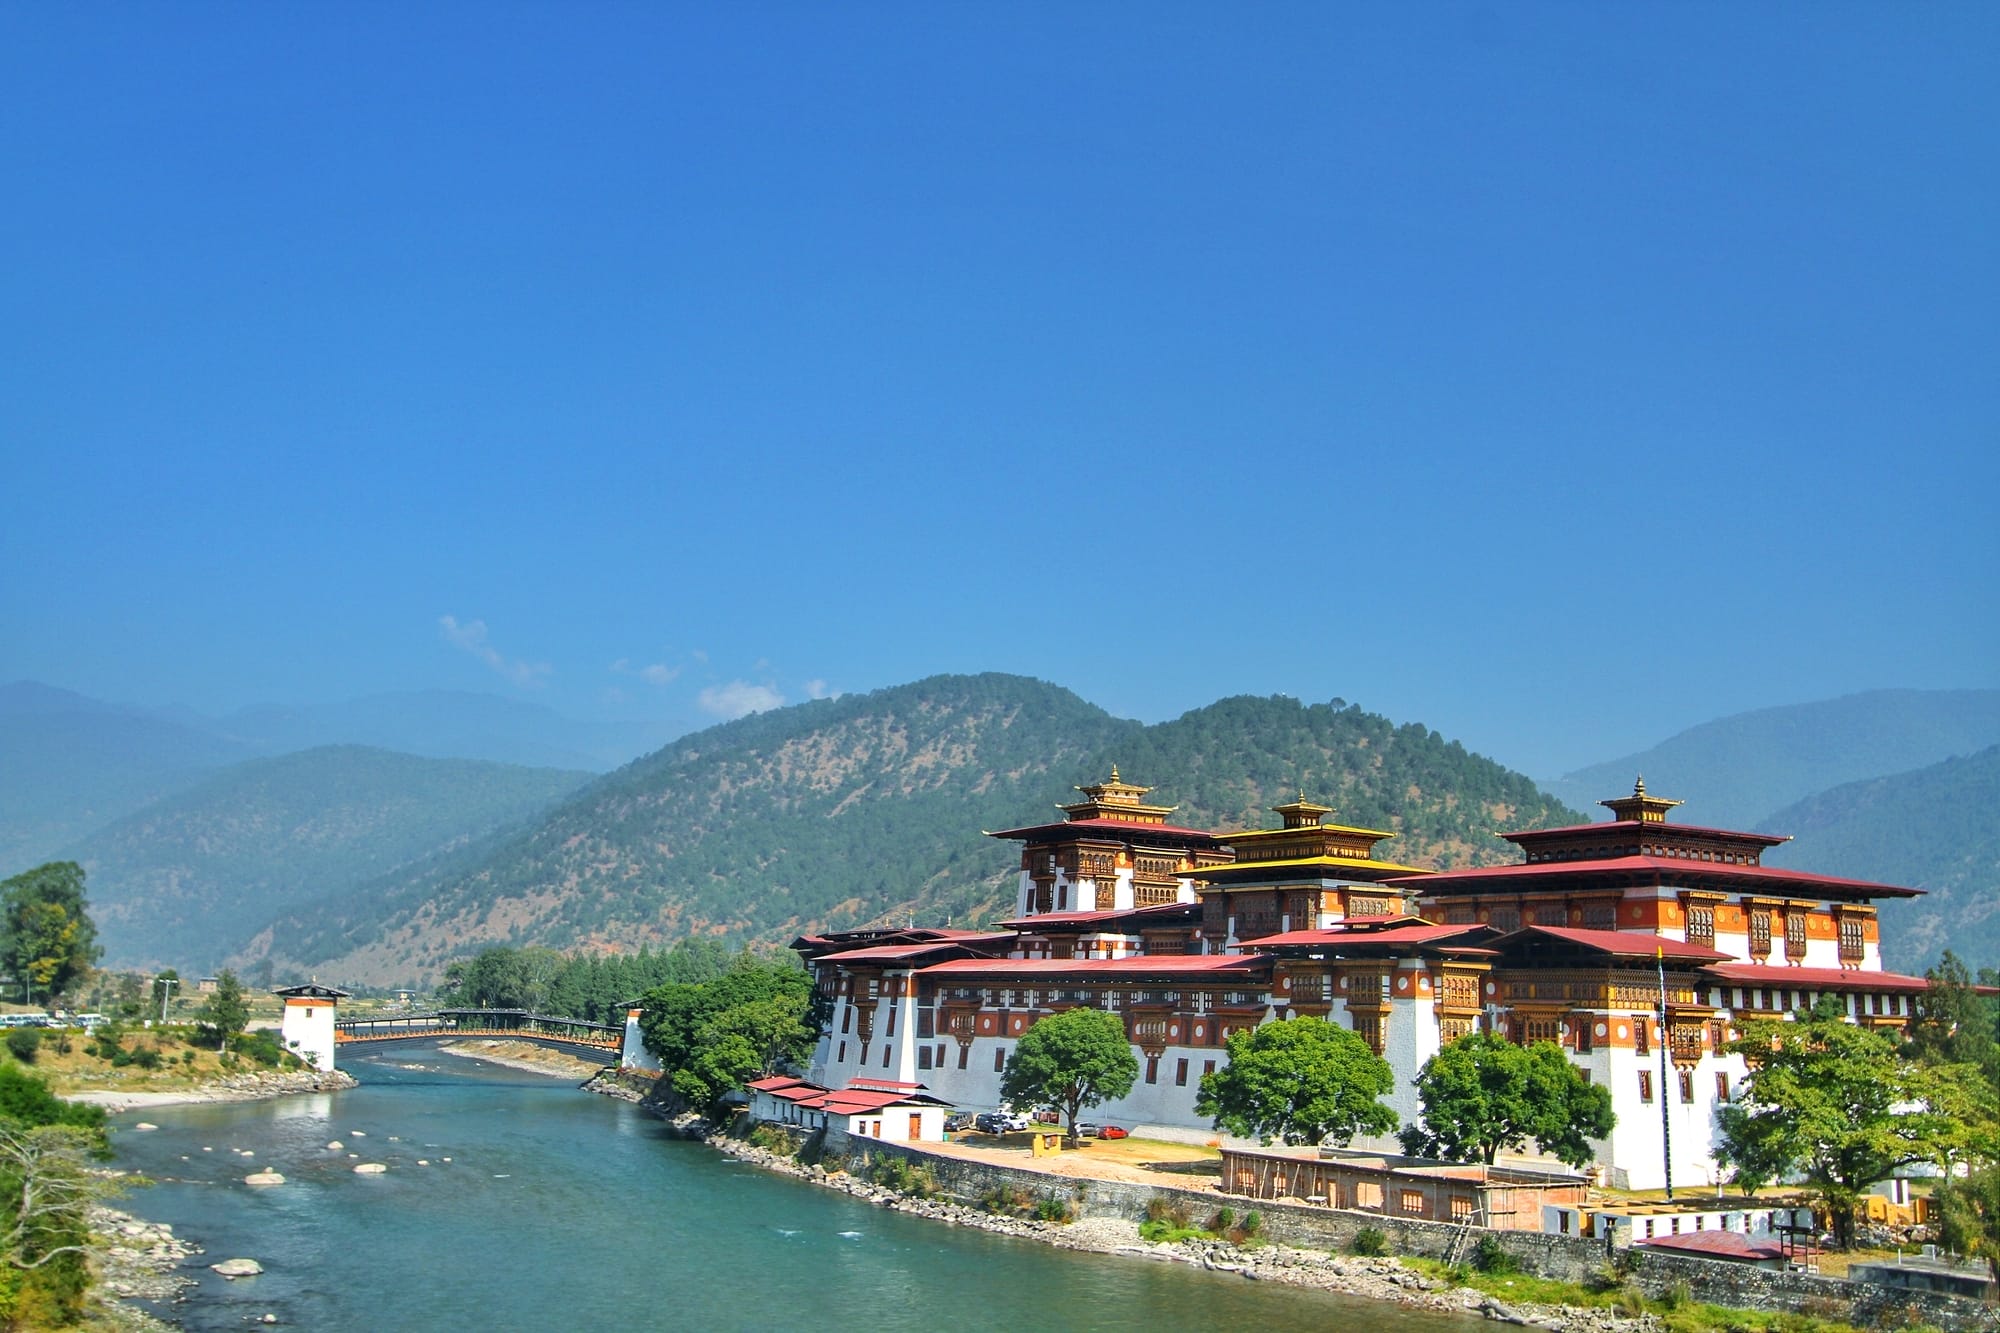 Punakha Dzong Monastery or Pungthang Dewachen Phodrang (Palace of Great Happiness) and Mo Chhu river in Punakha, the old capital of Bhutan.